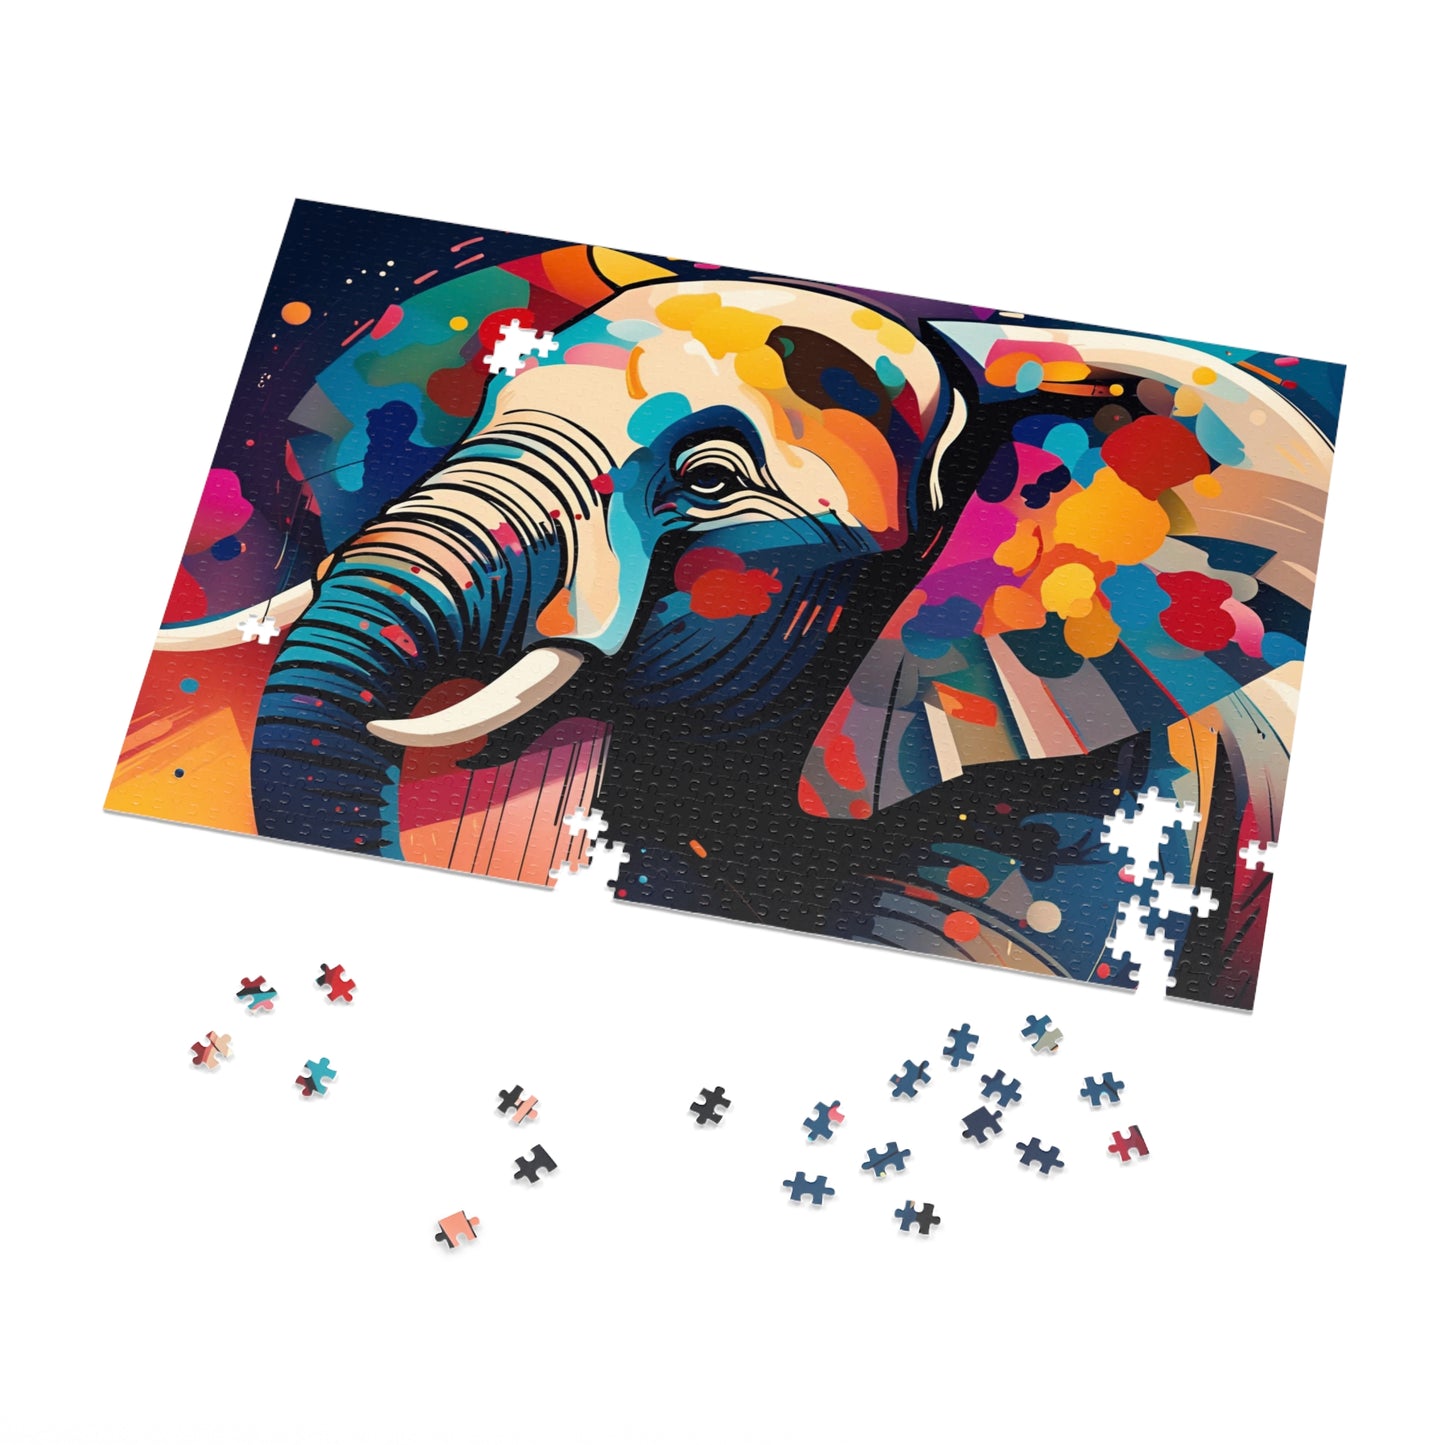 Multicolor Elephant Head Print on 1000 Pieces Puzzle in progress